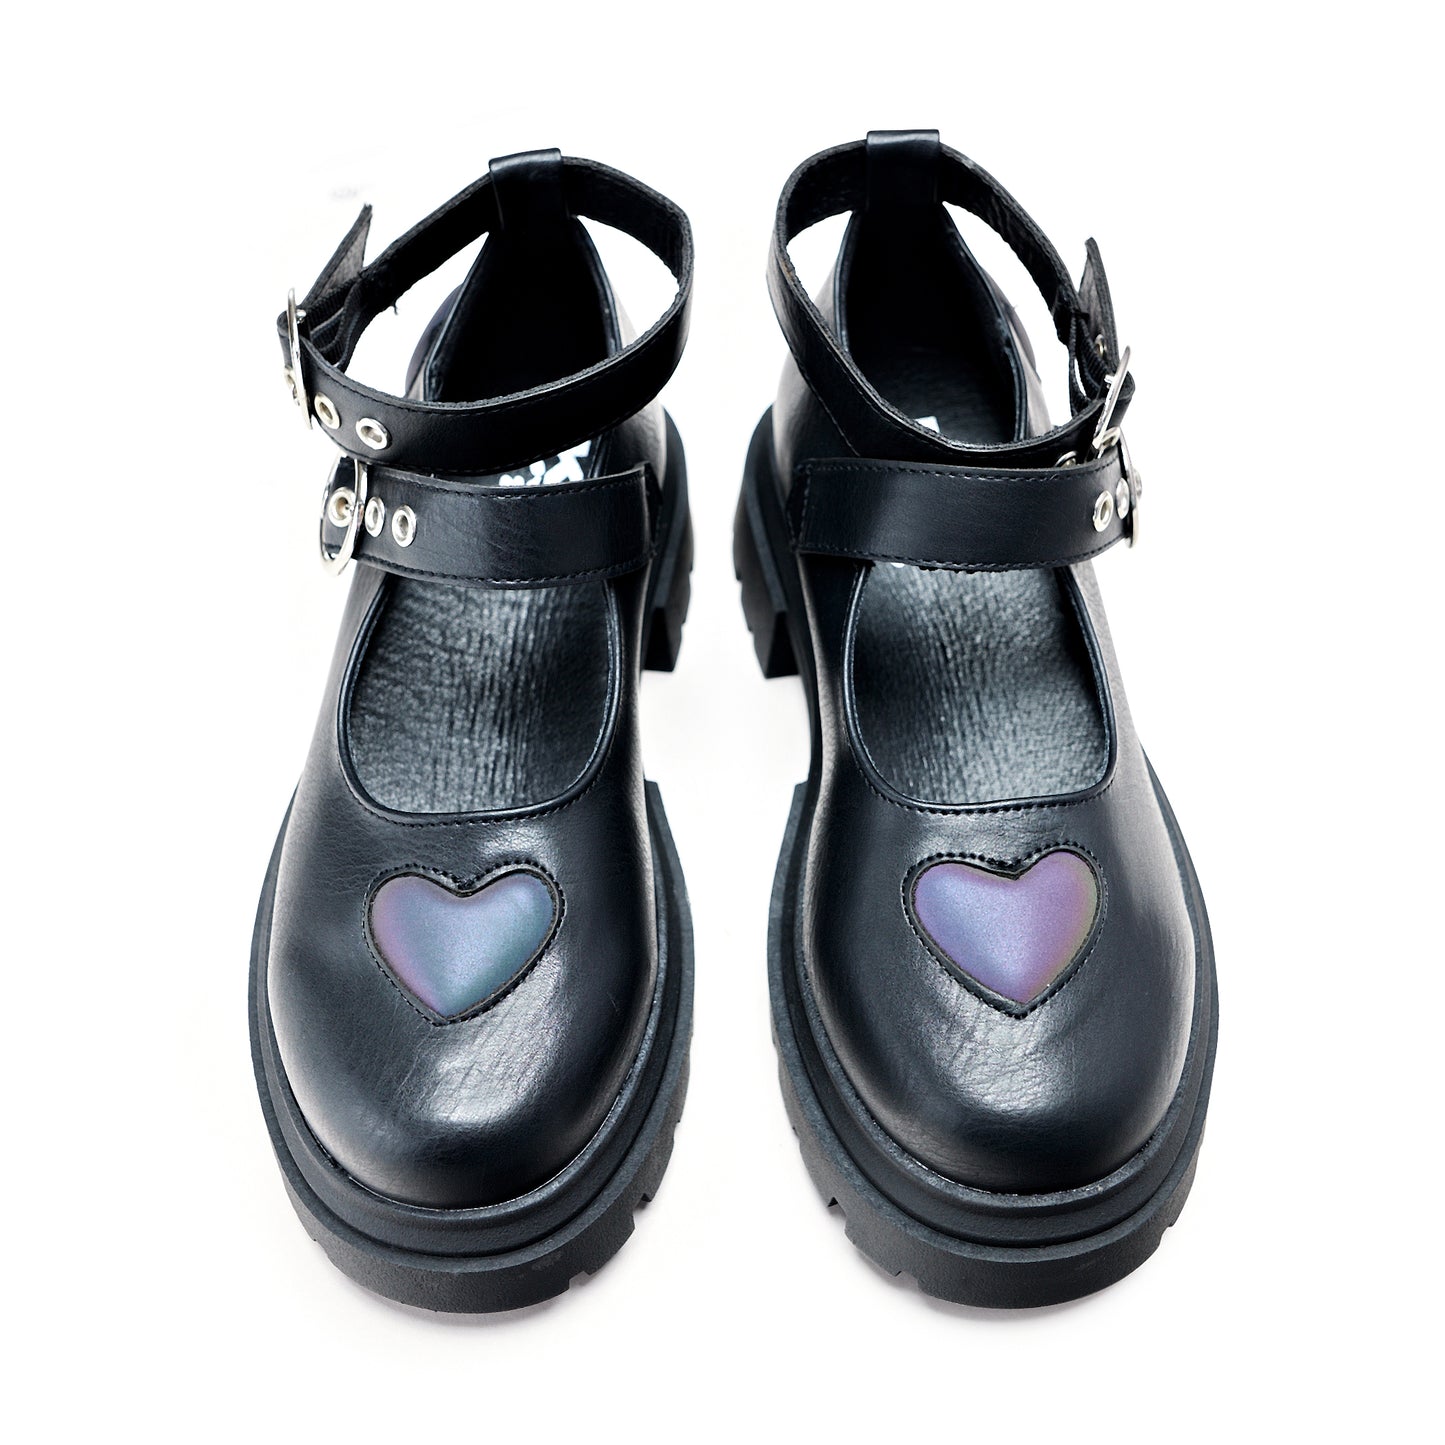 Lovebug Meadow Kidz Mary Jane Shoes - Mary Janes - KOI Footwear - Black - Top View